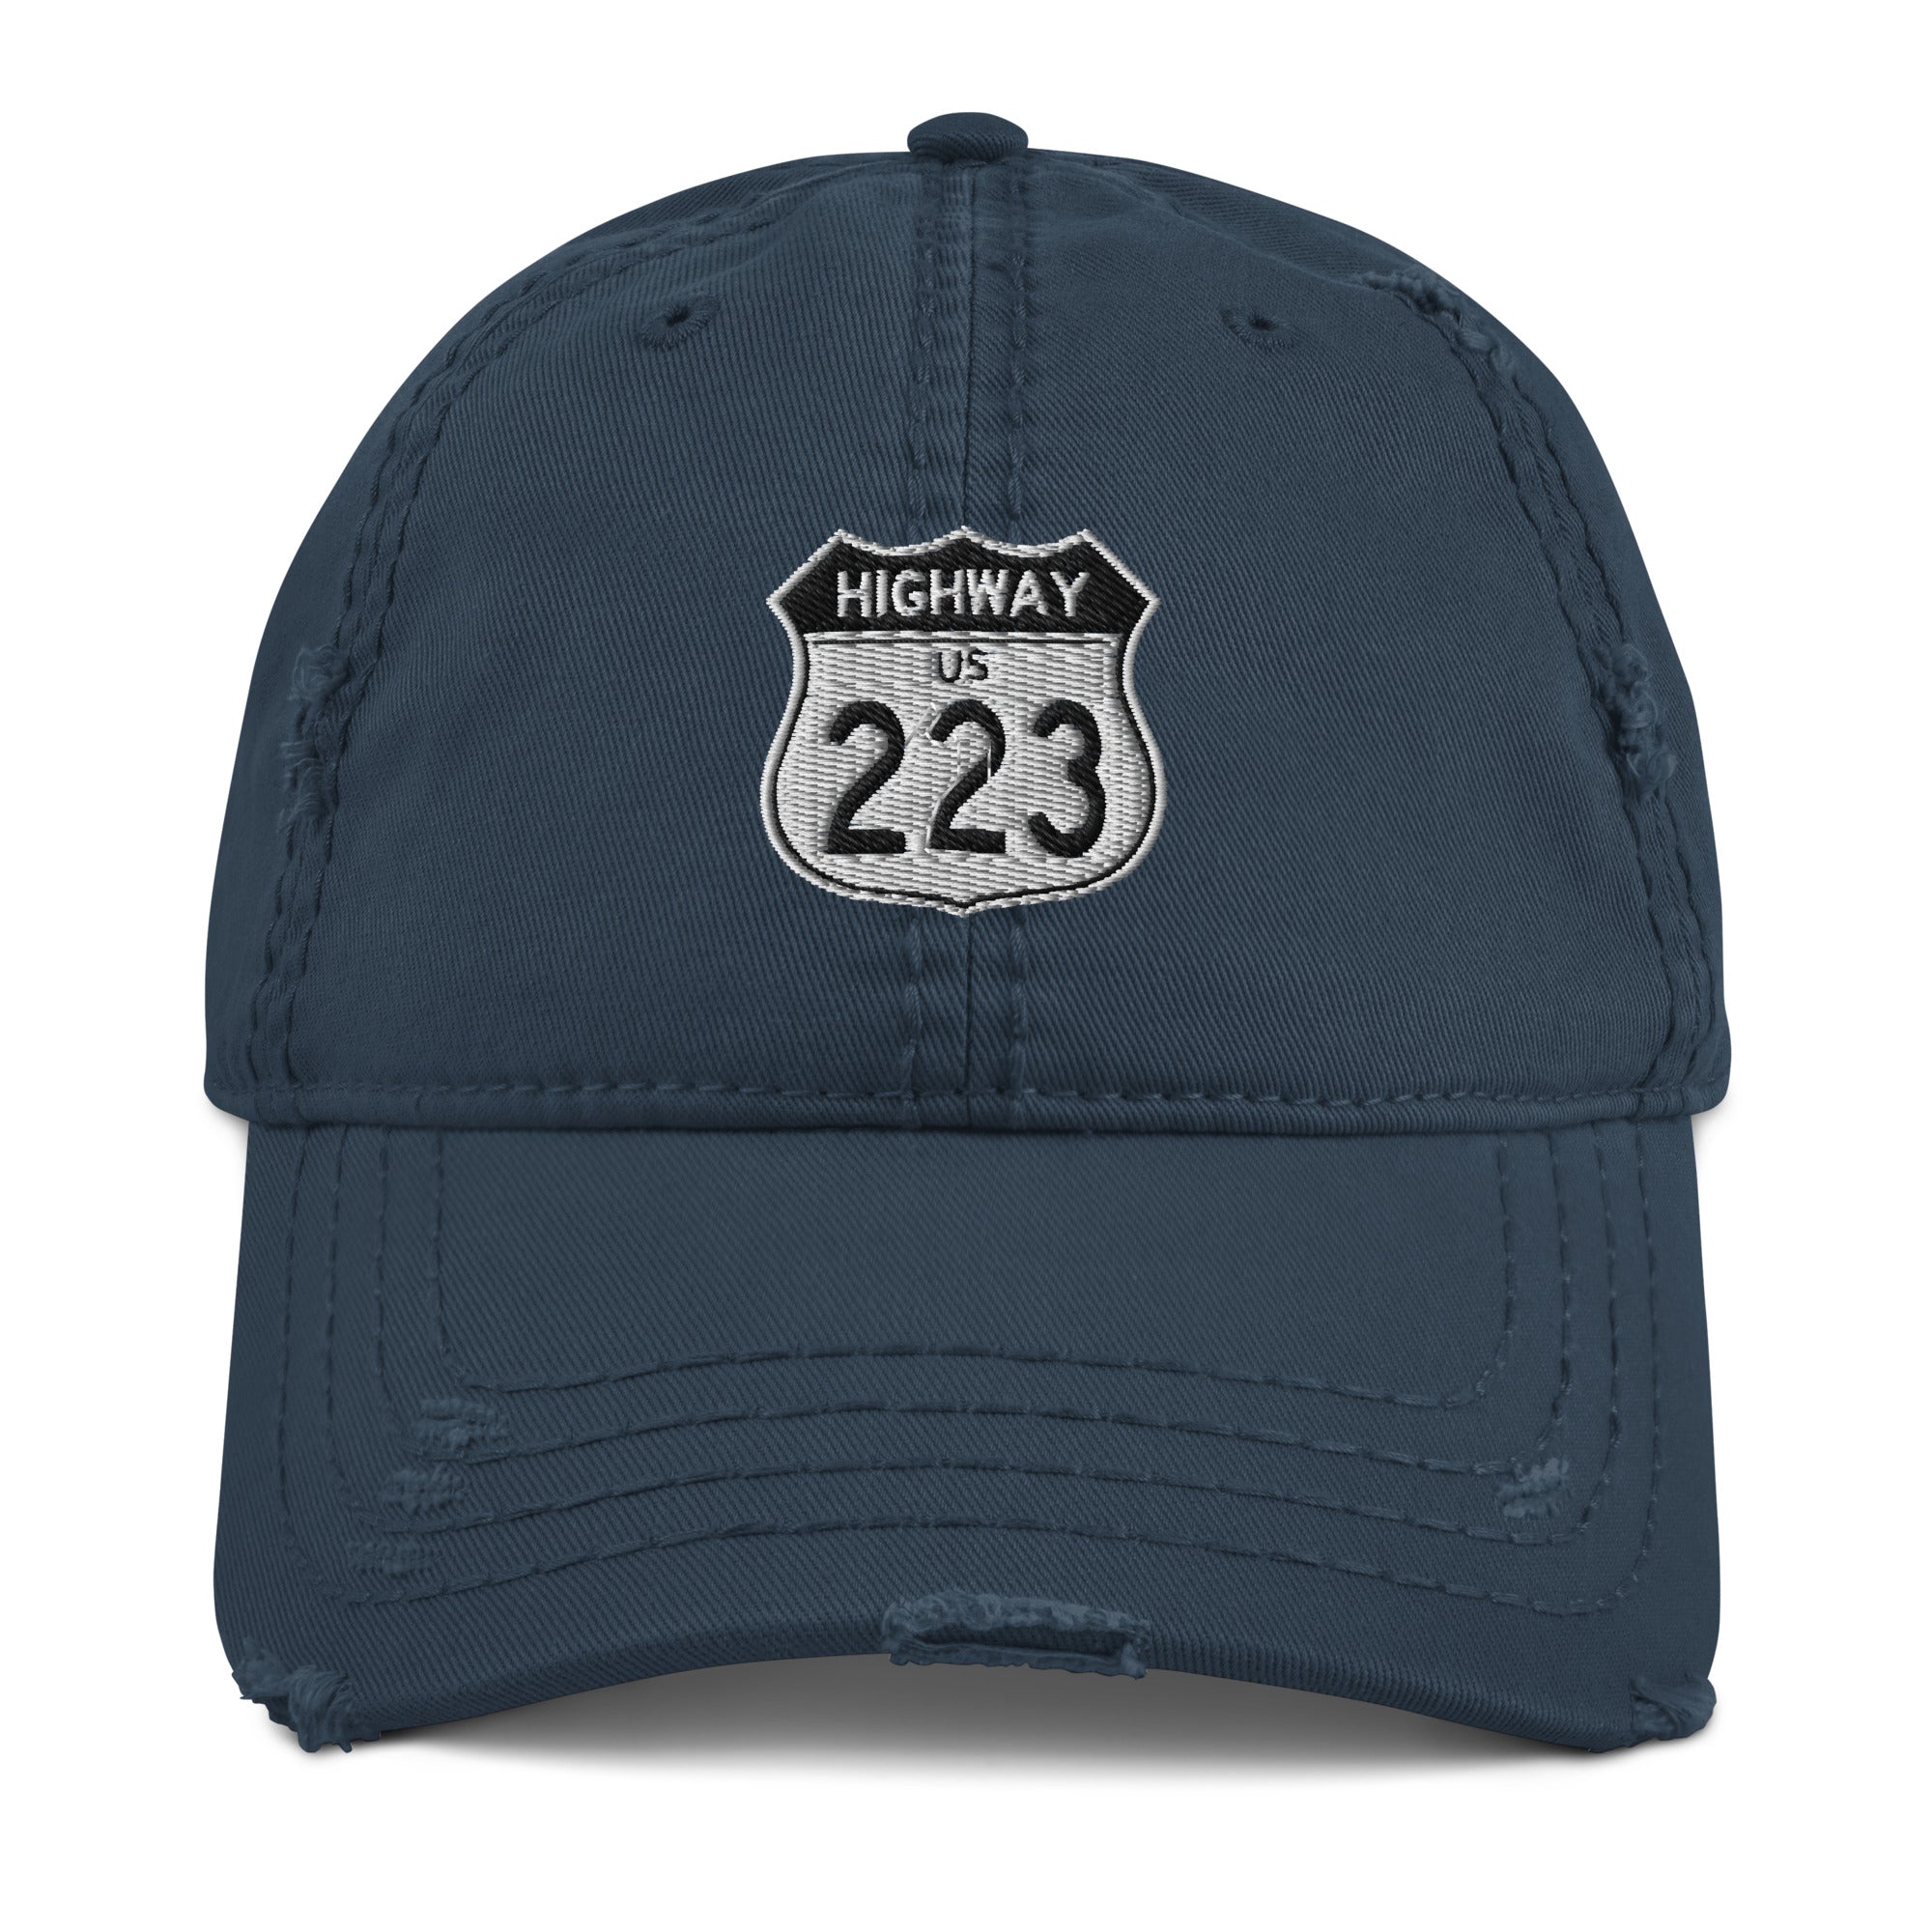 Highway 223 Distressed Dad Hat